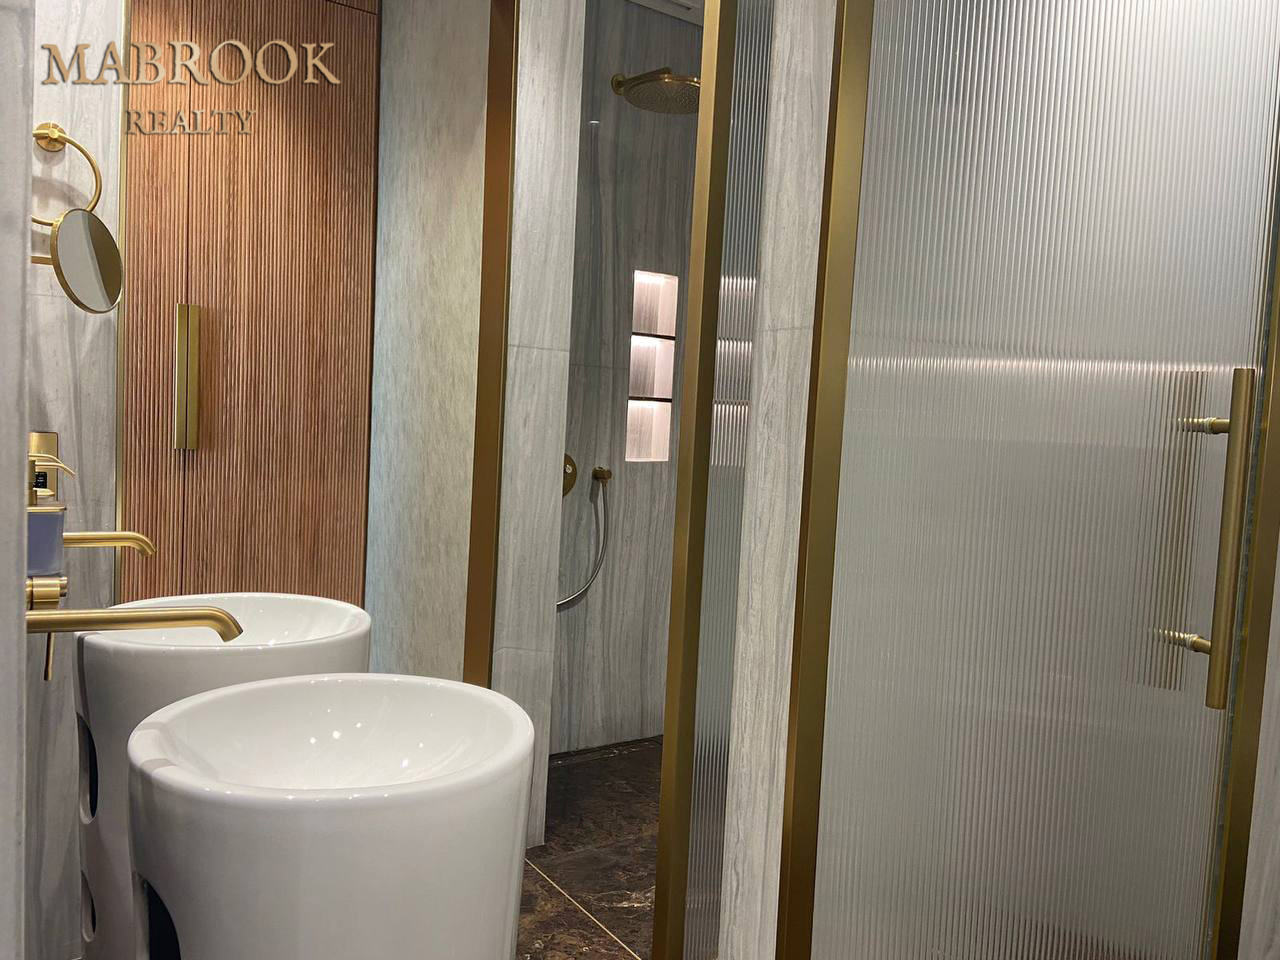 luxury bathroom vanity units apartments mabrook realty